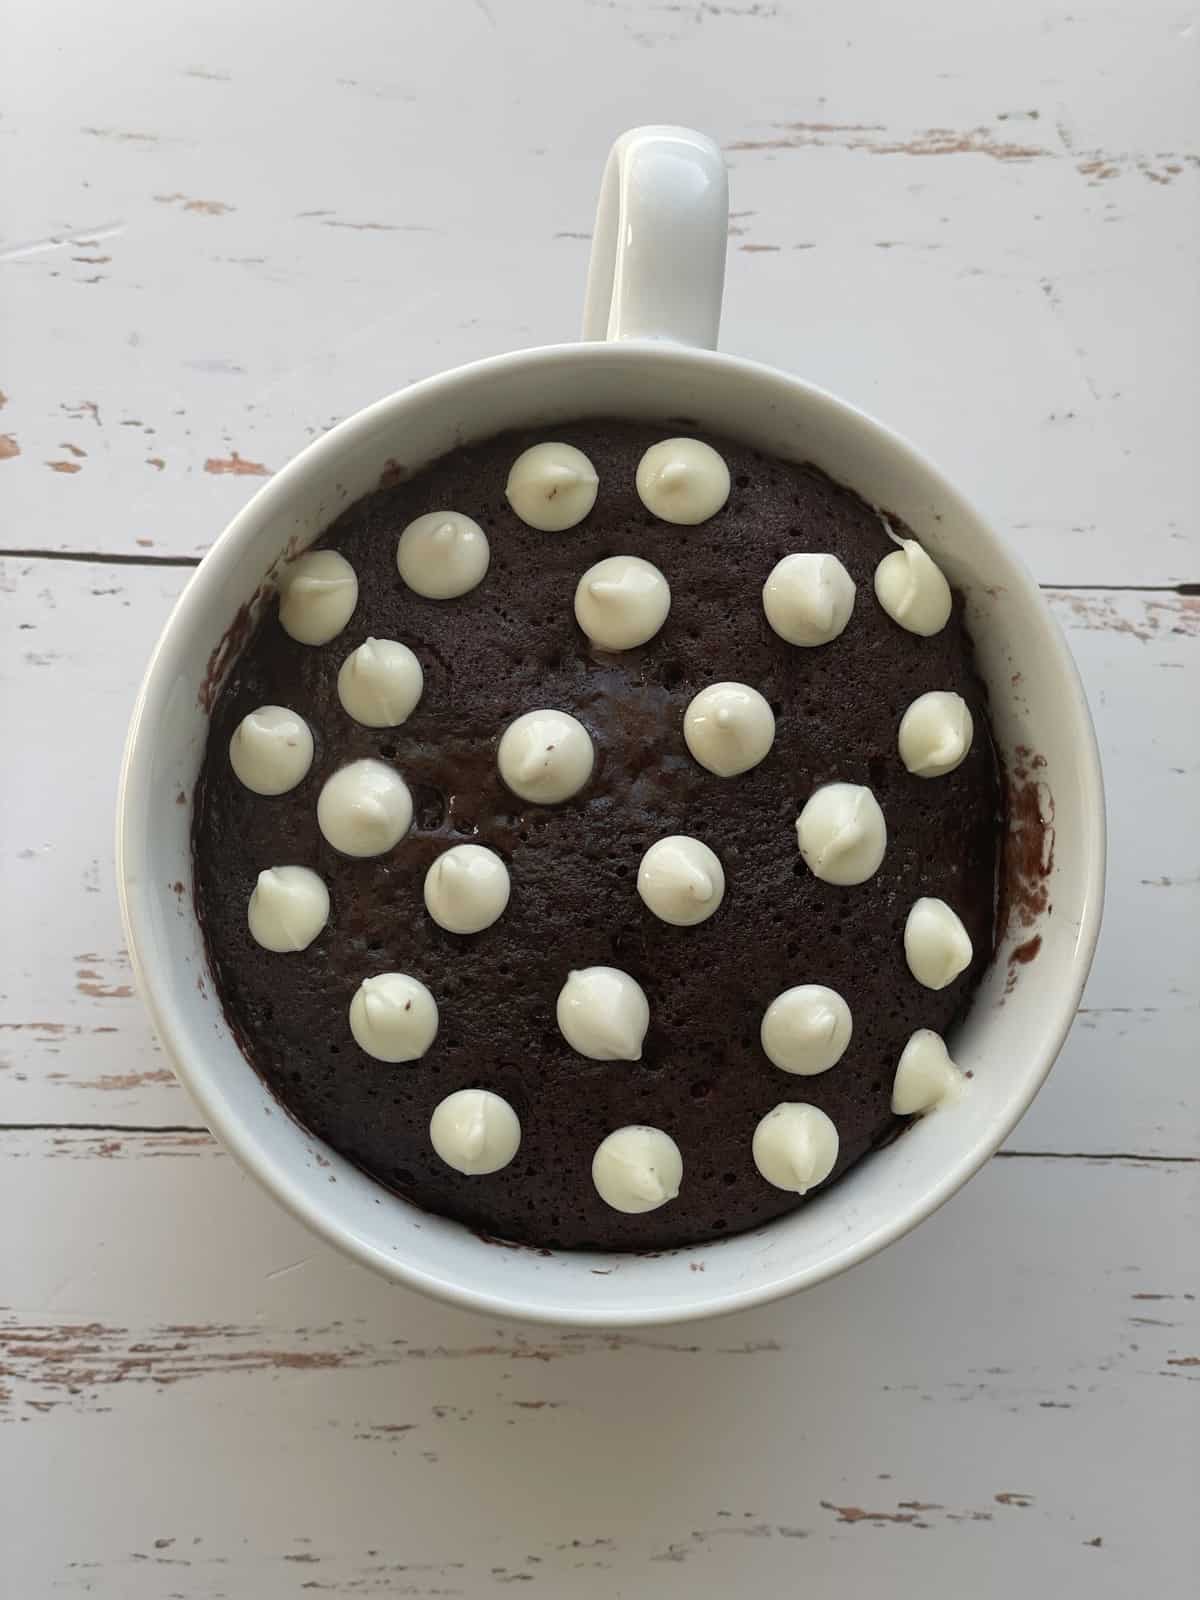 Chocolate mug cake topped with white chocolate chips.